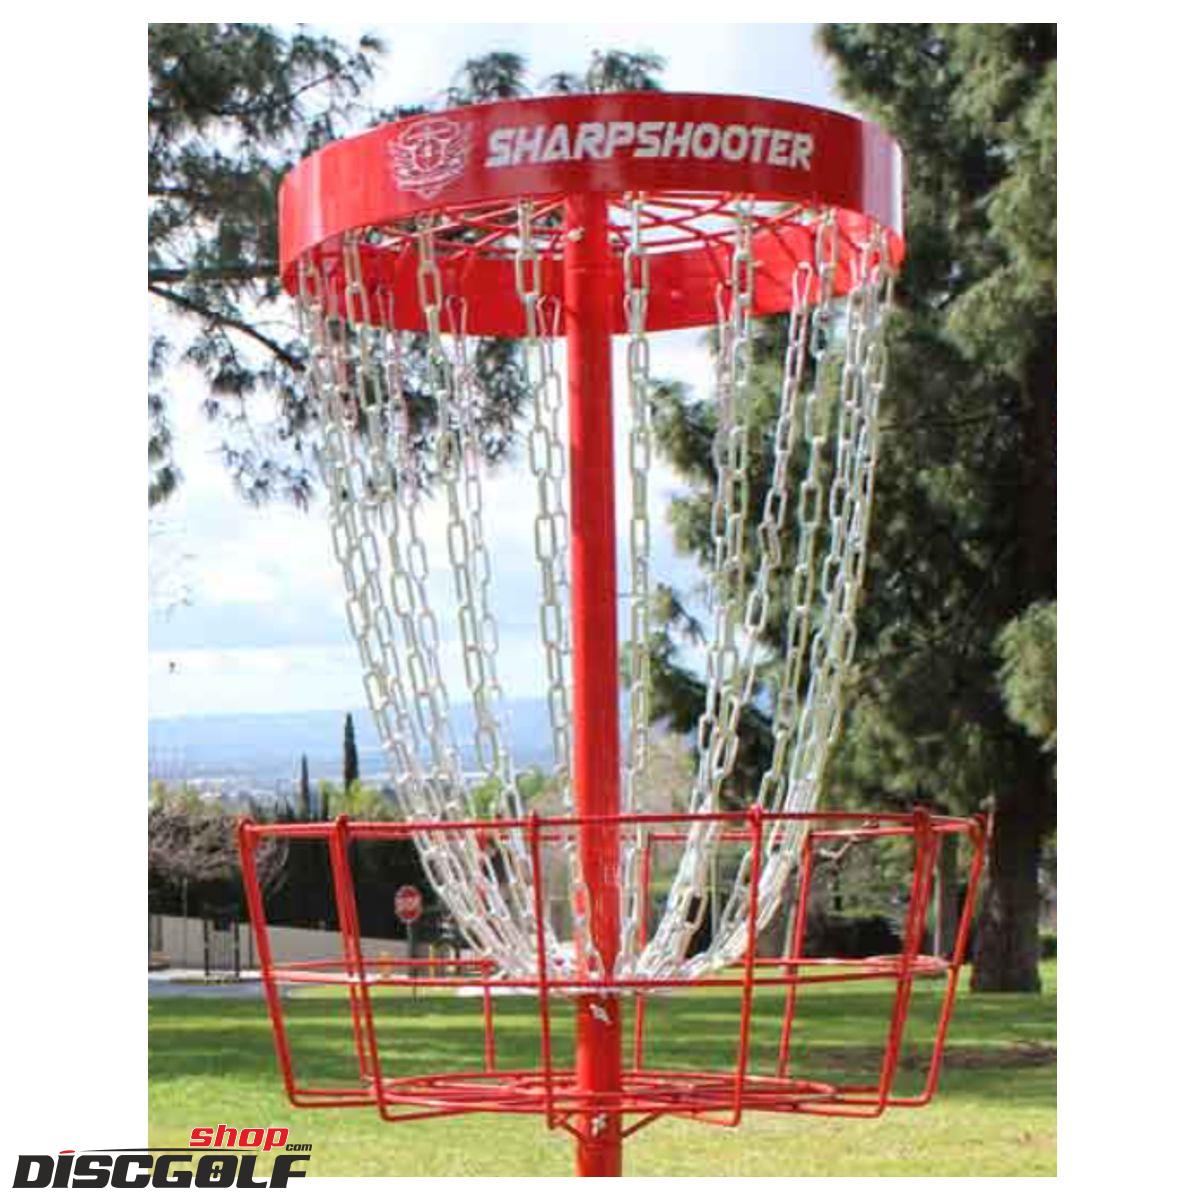 Legacy Discs Sharpshooter Basket (discgolf)